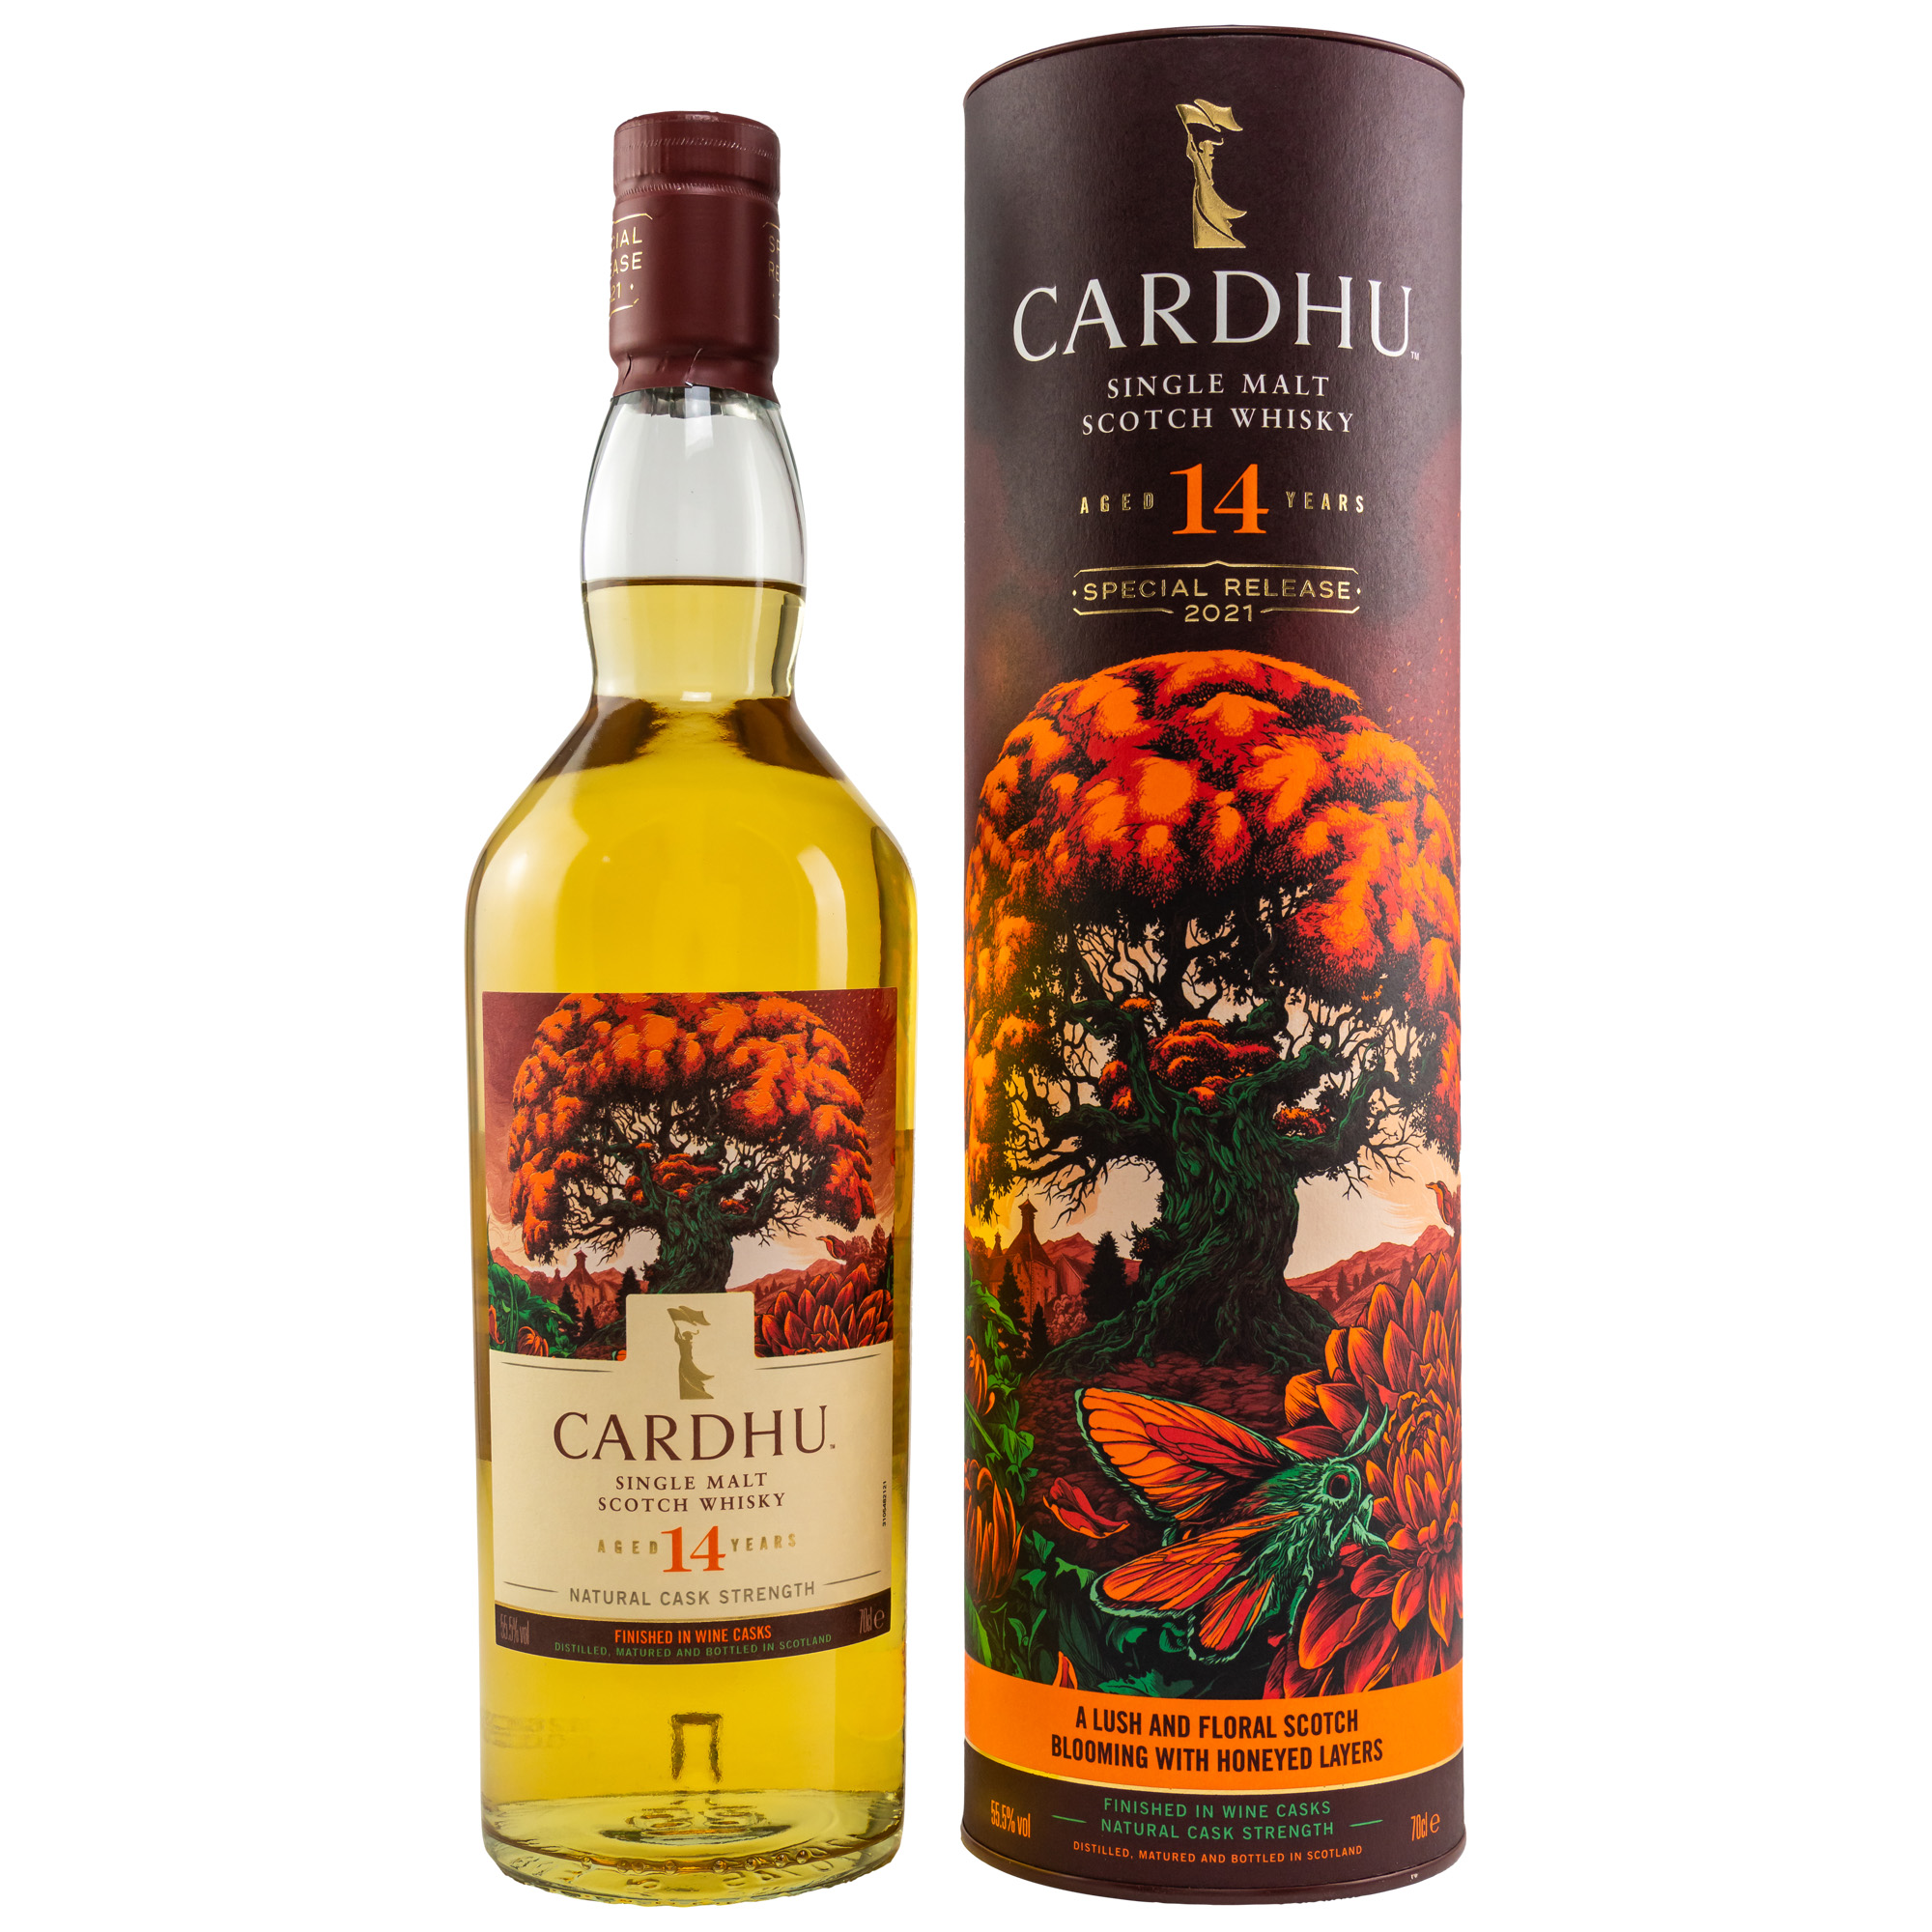 Cardhu 14 y.o. - Special Releases 2021